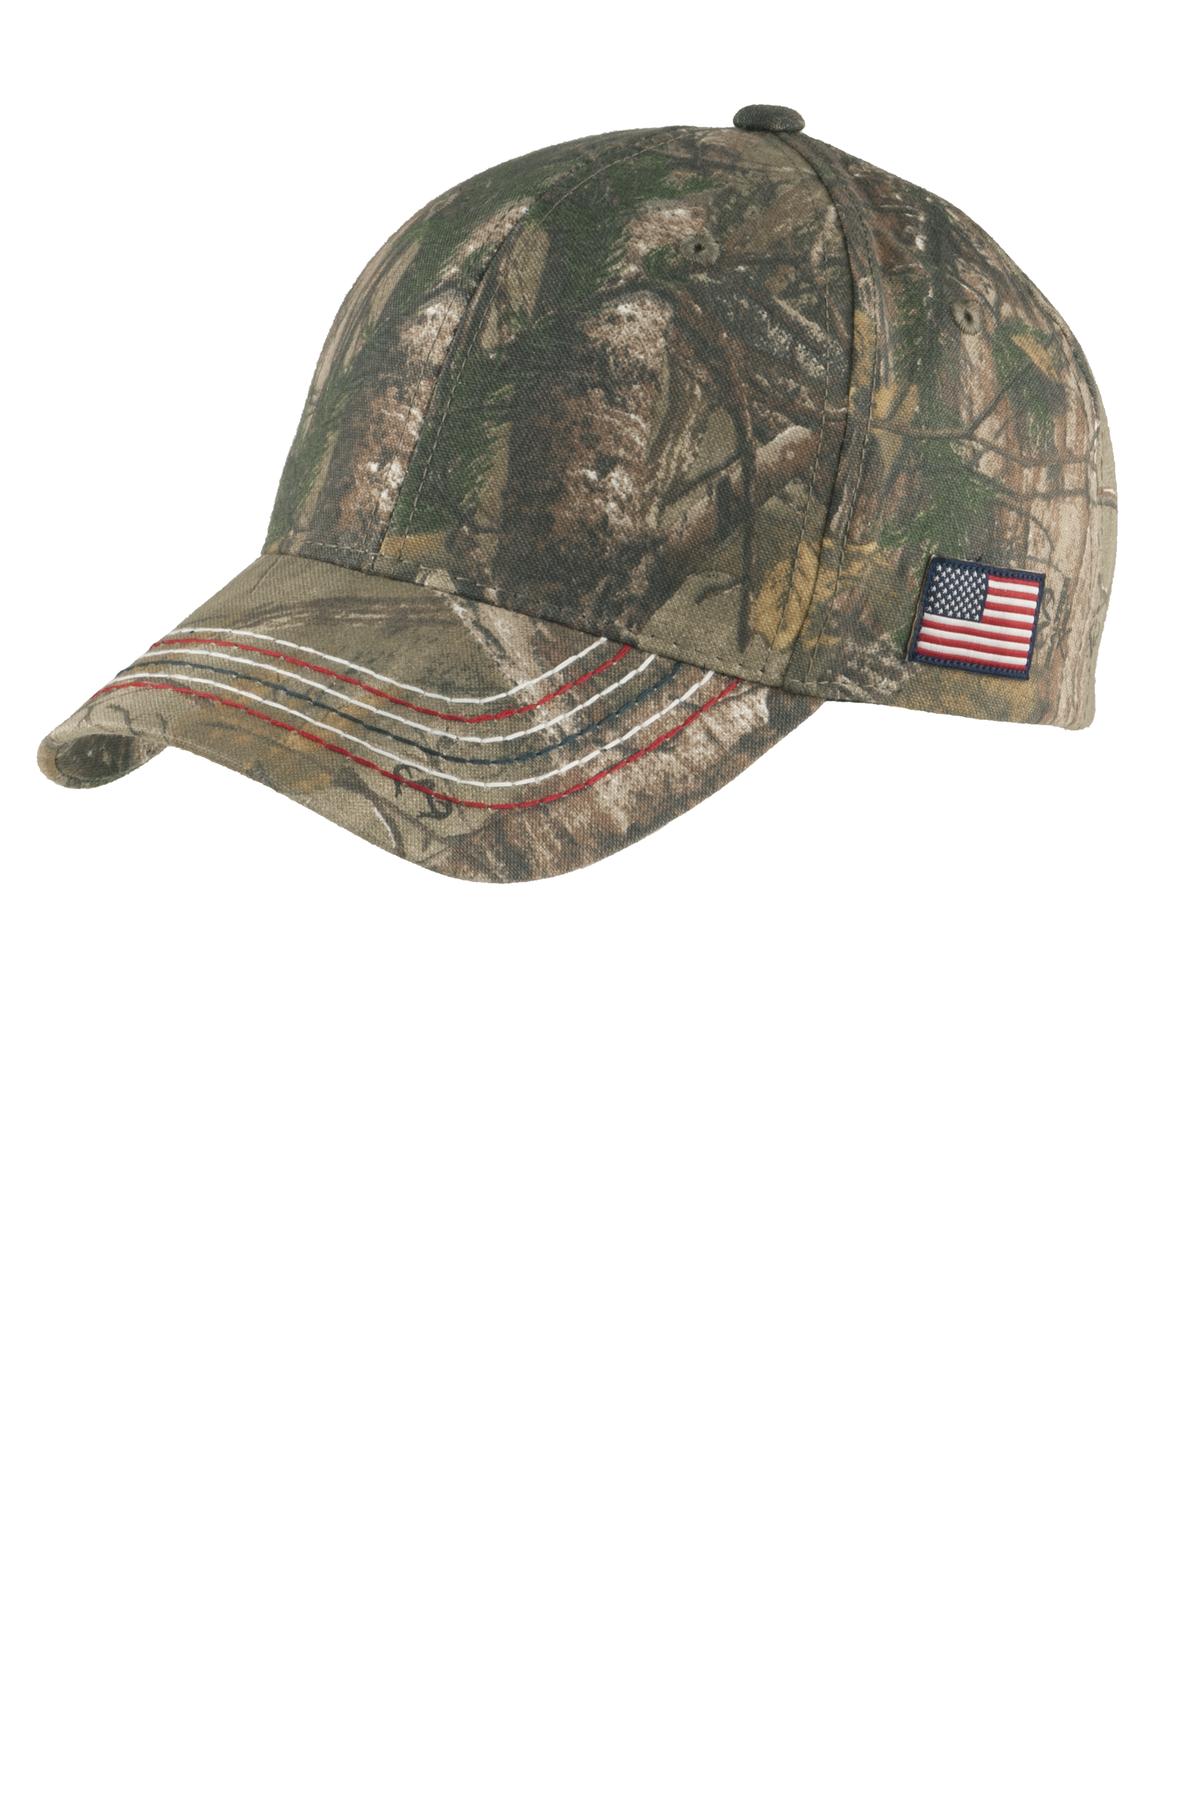 Port & Company Mens Americana Contrast Stitch Camouflage Cap. C909